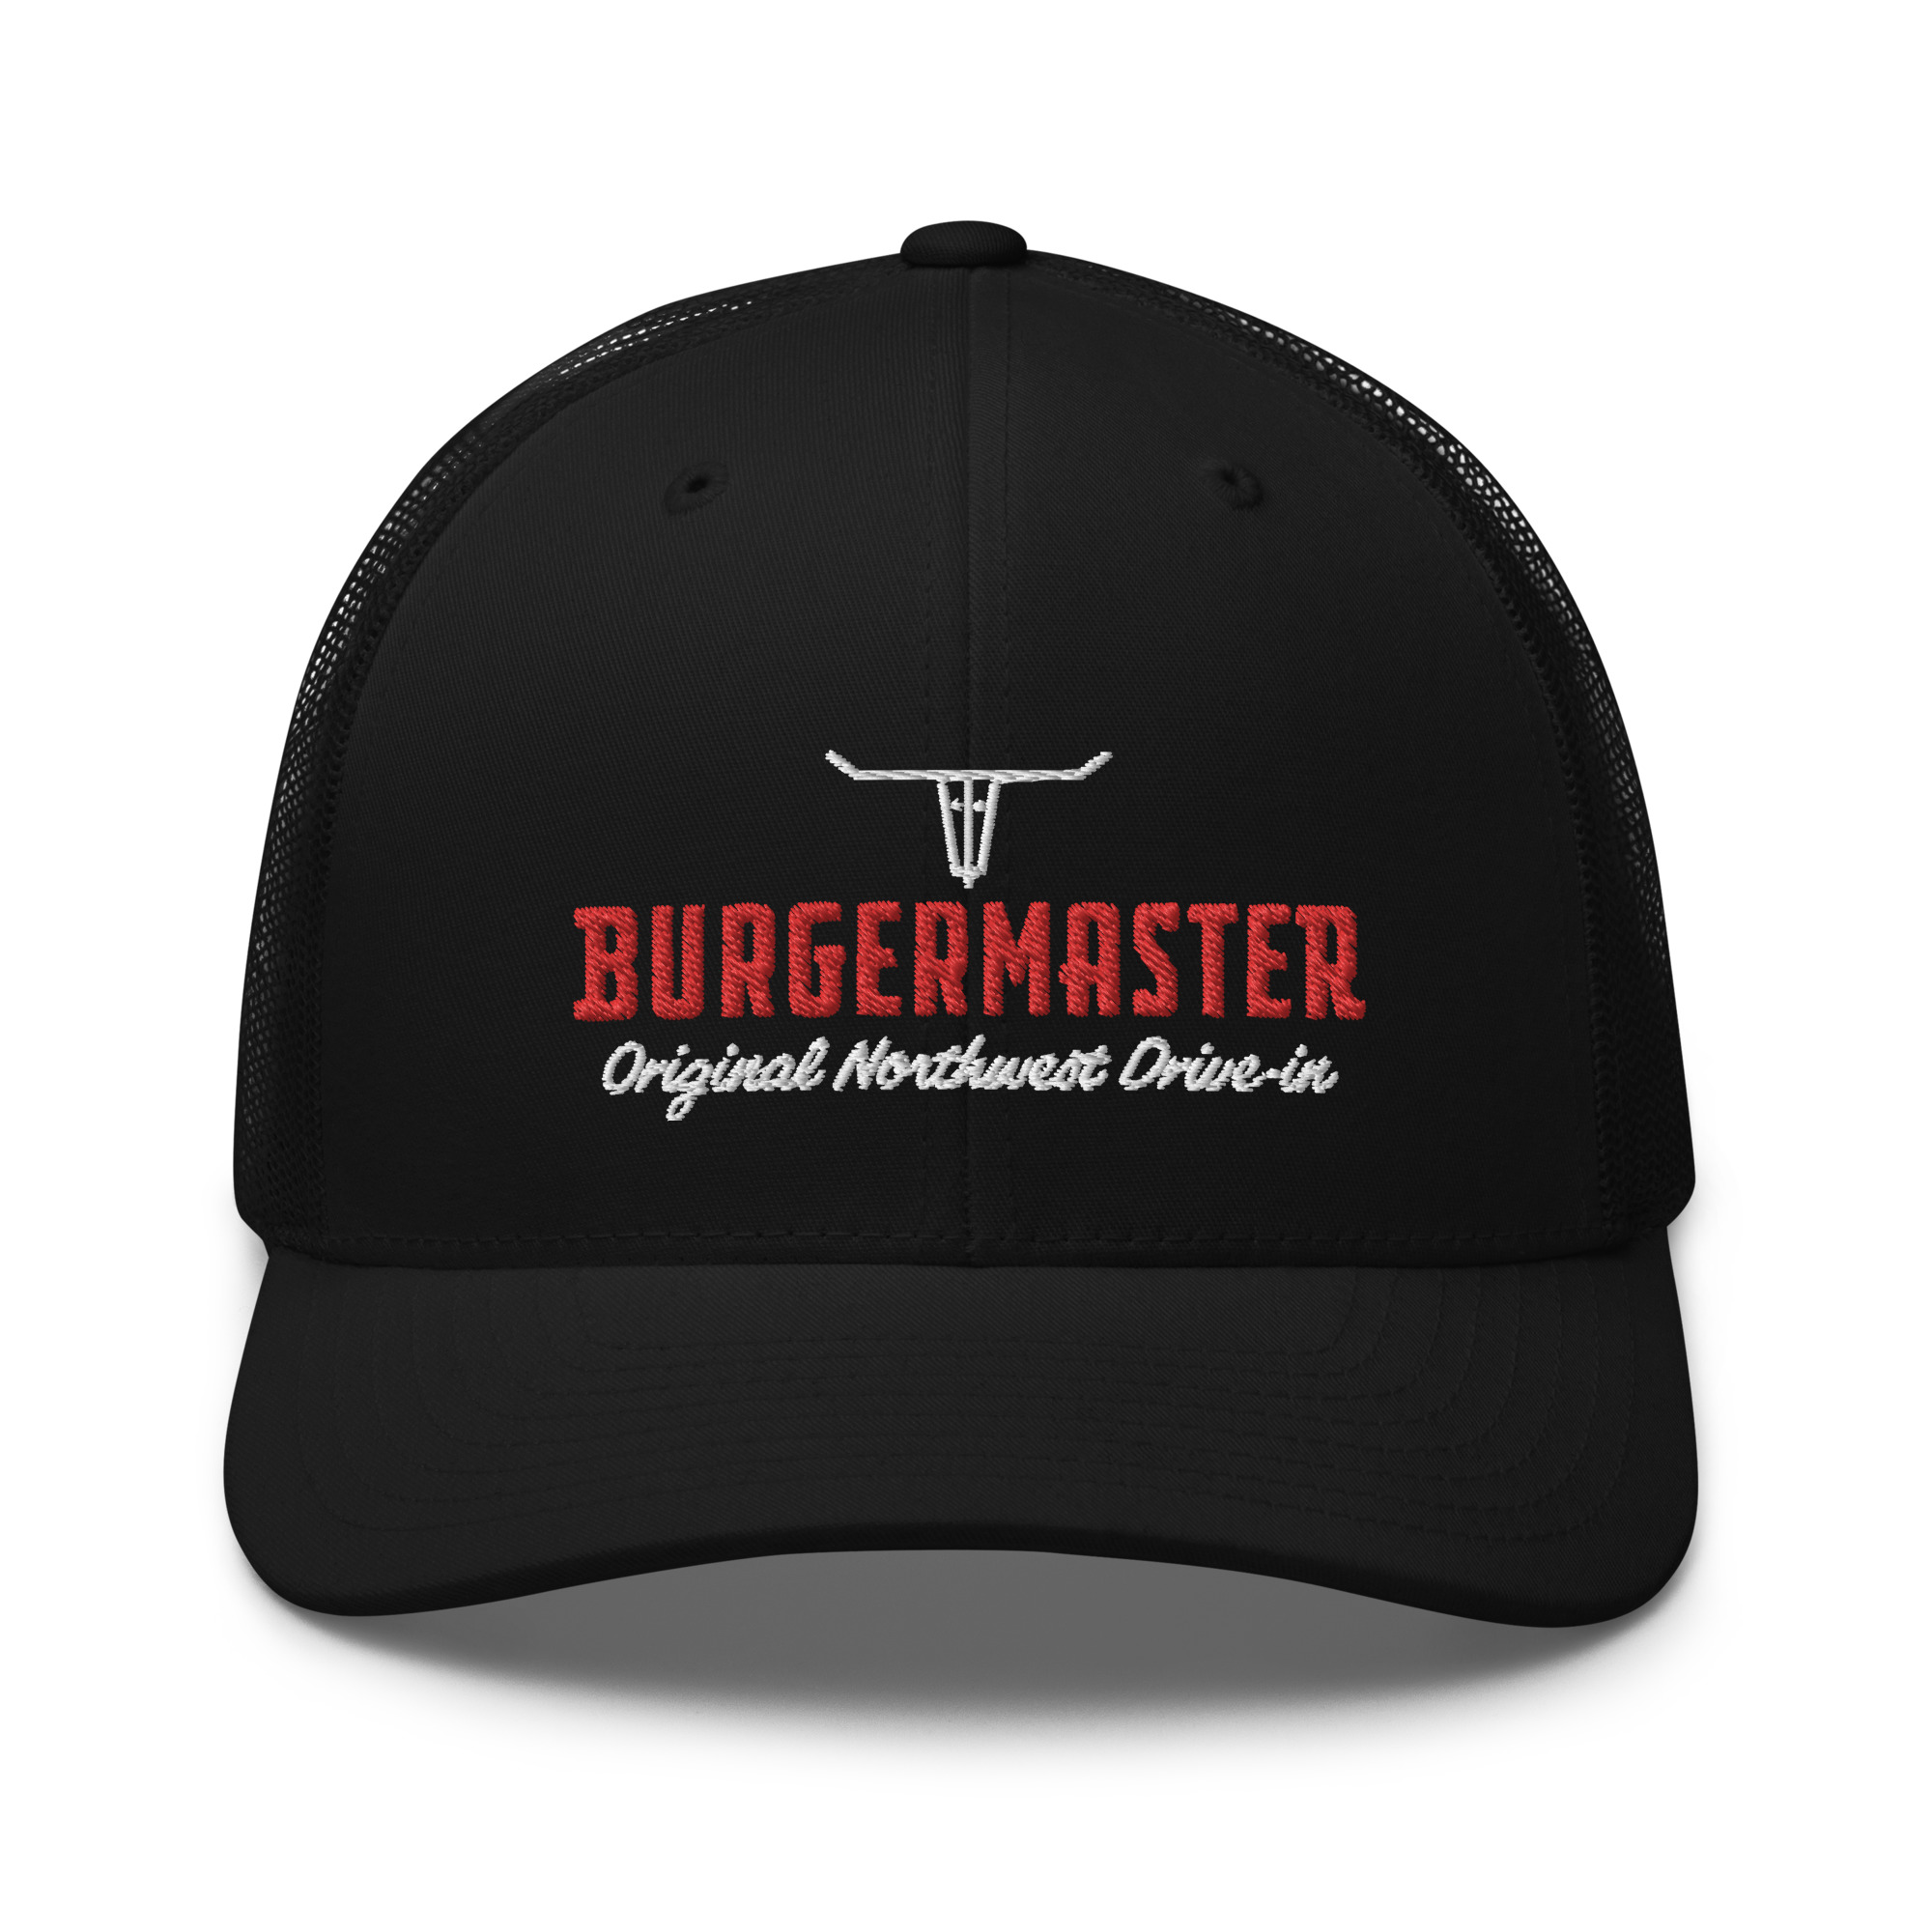 Burgermaster Trucker Hat Black